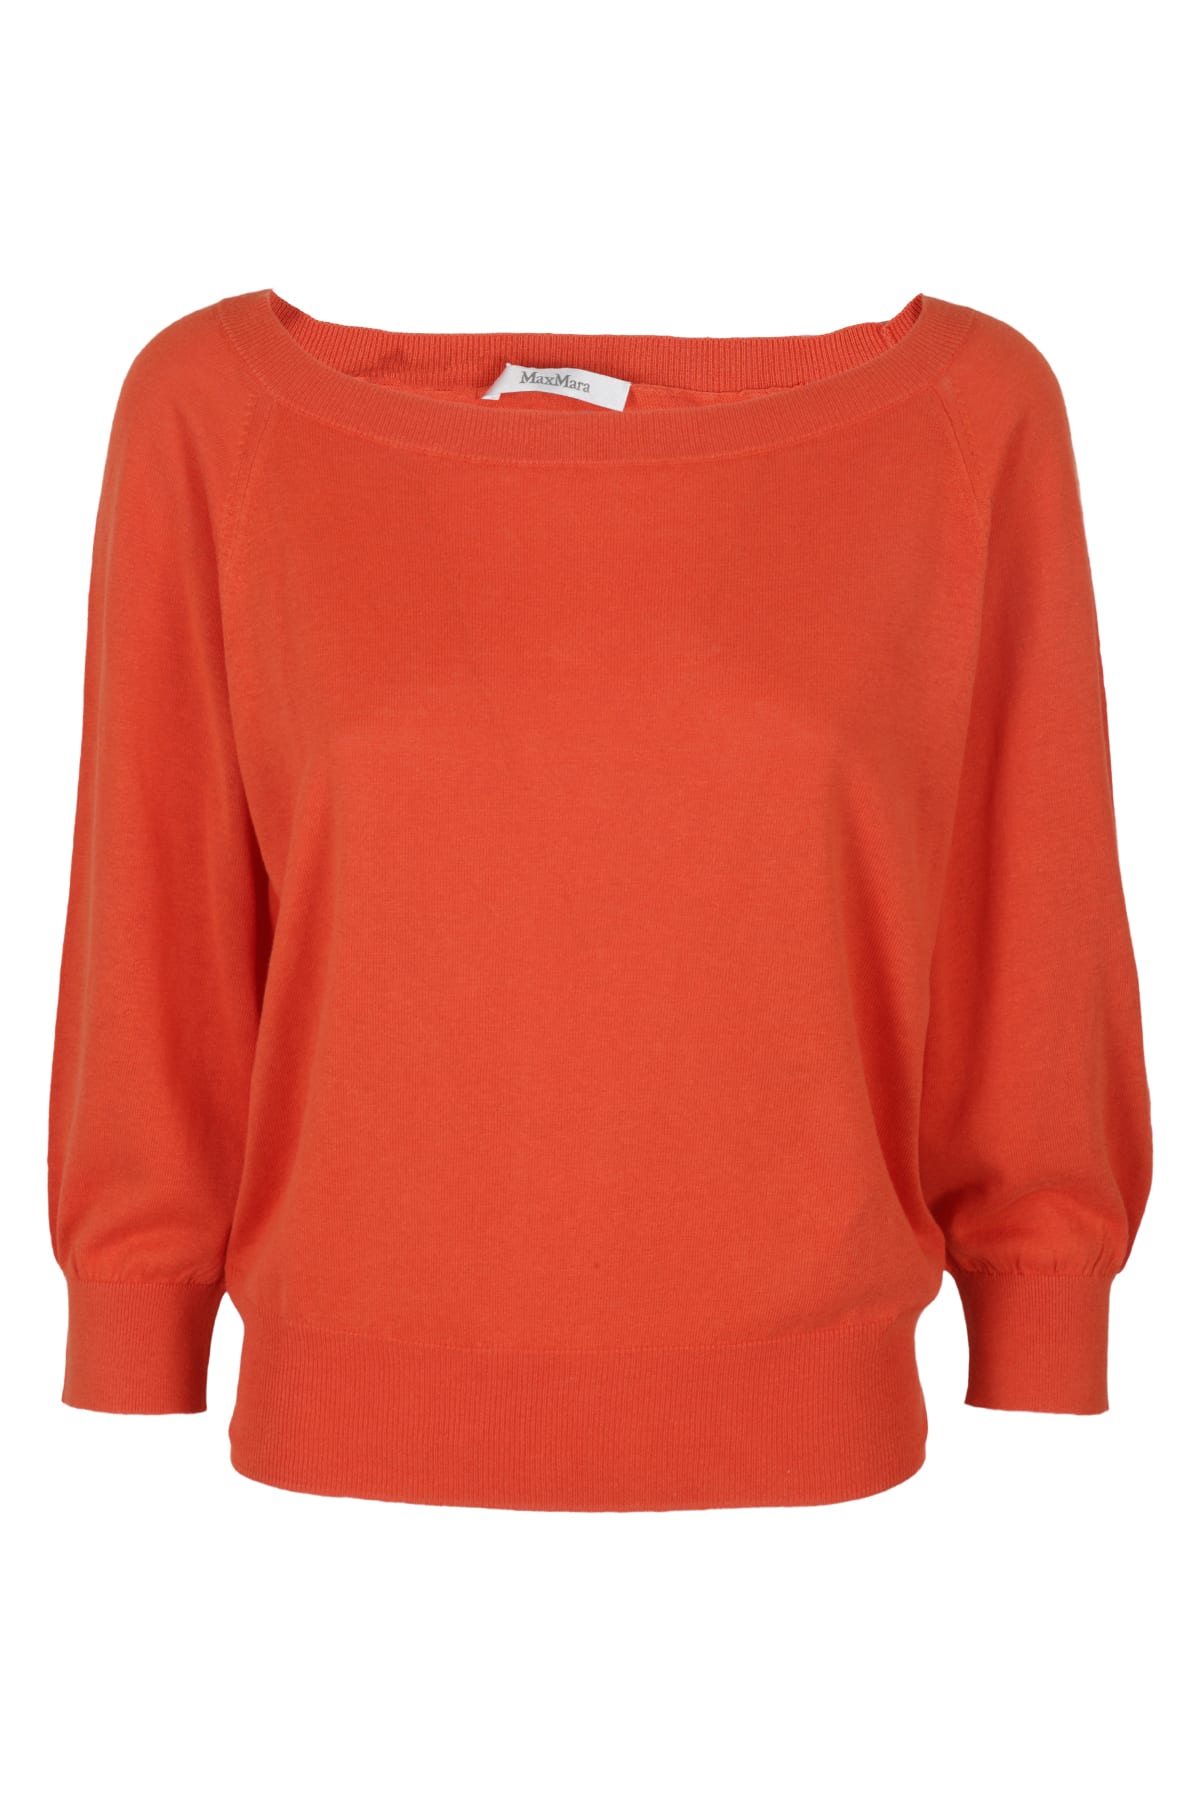 Max Mara Sweater In Arancione